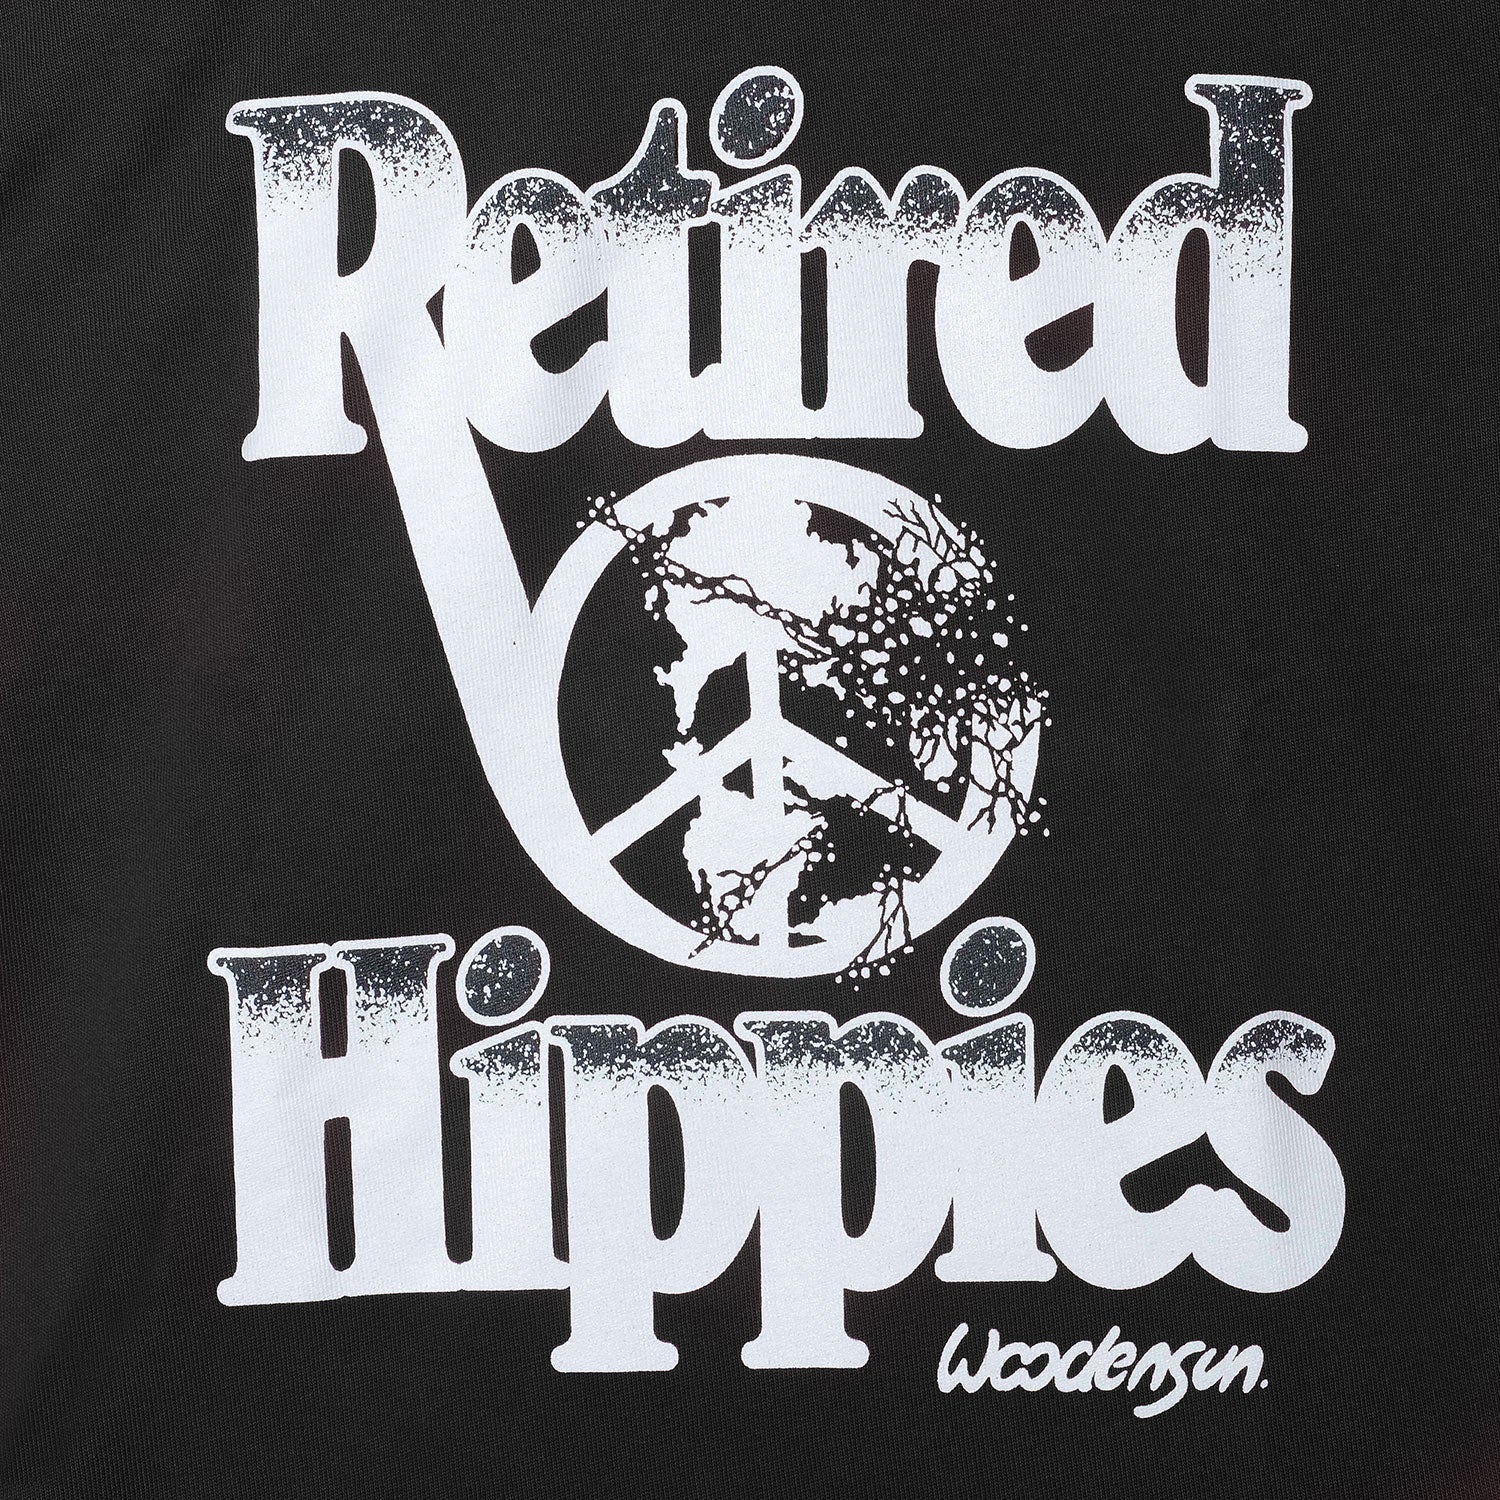 Retired Hippies - Shortsleeve T-Shirt